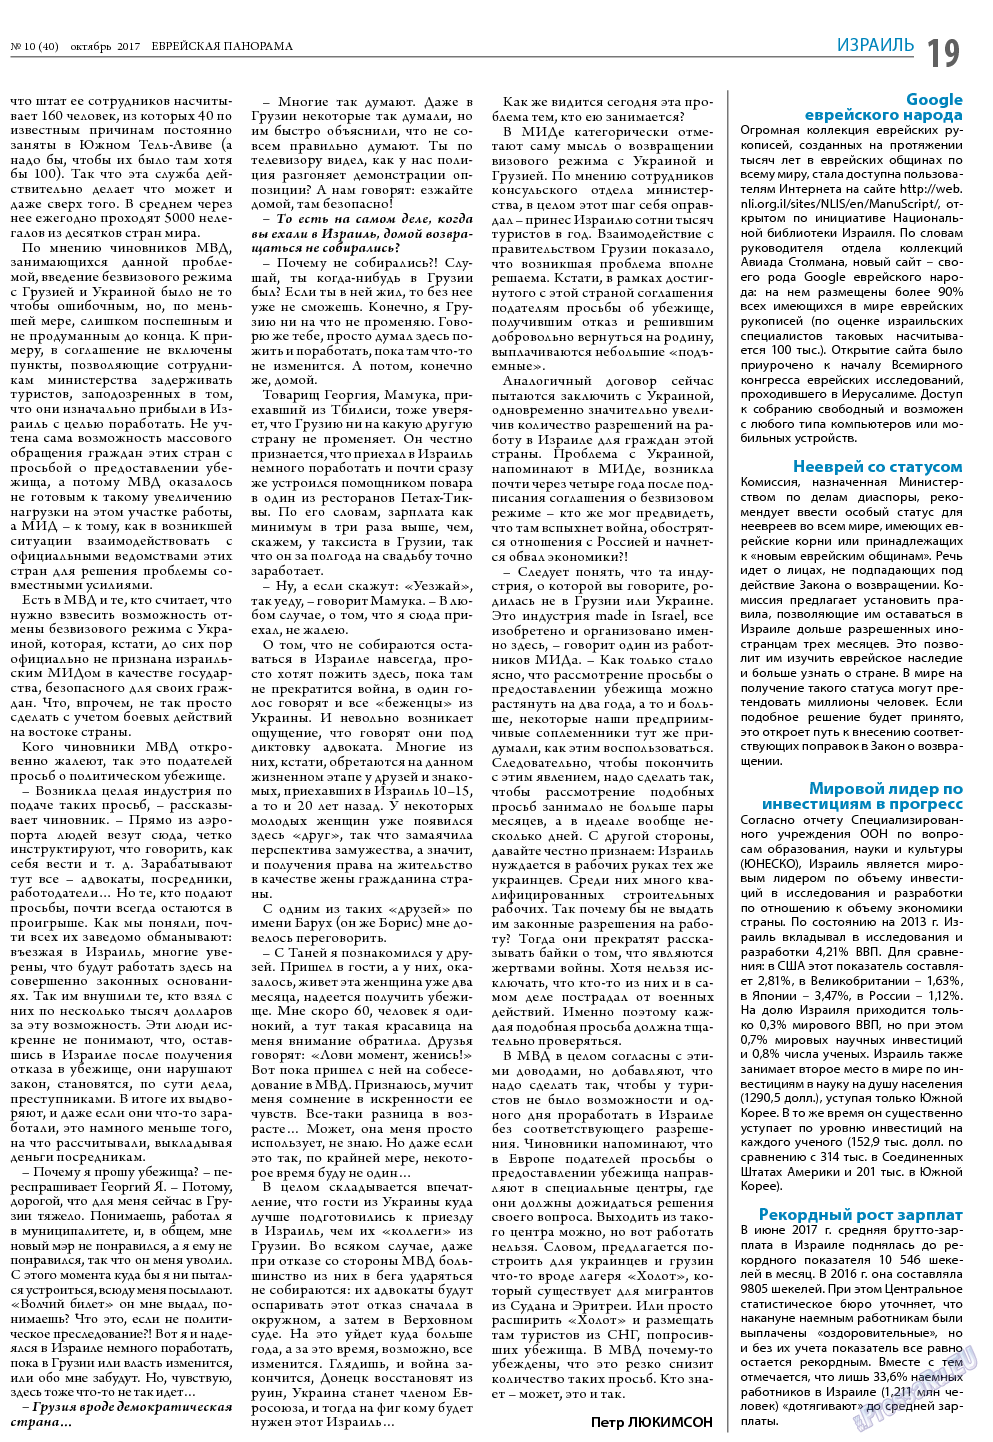 Еврейская панорама, газета. 2017 №10 стр.19